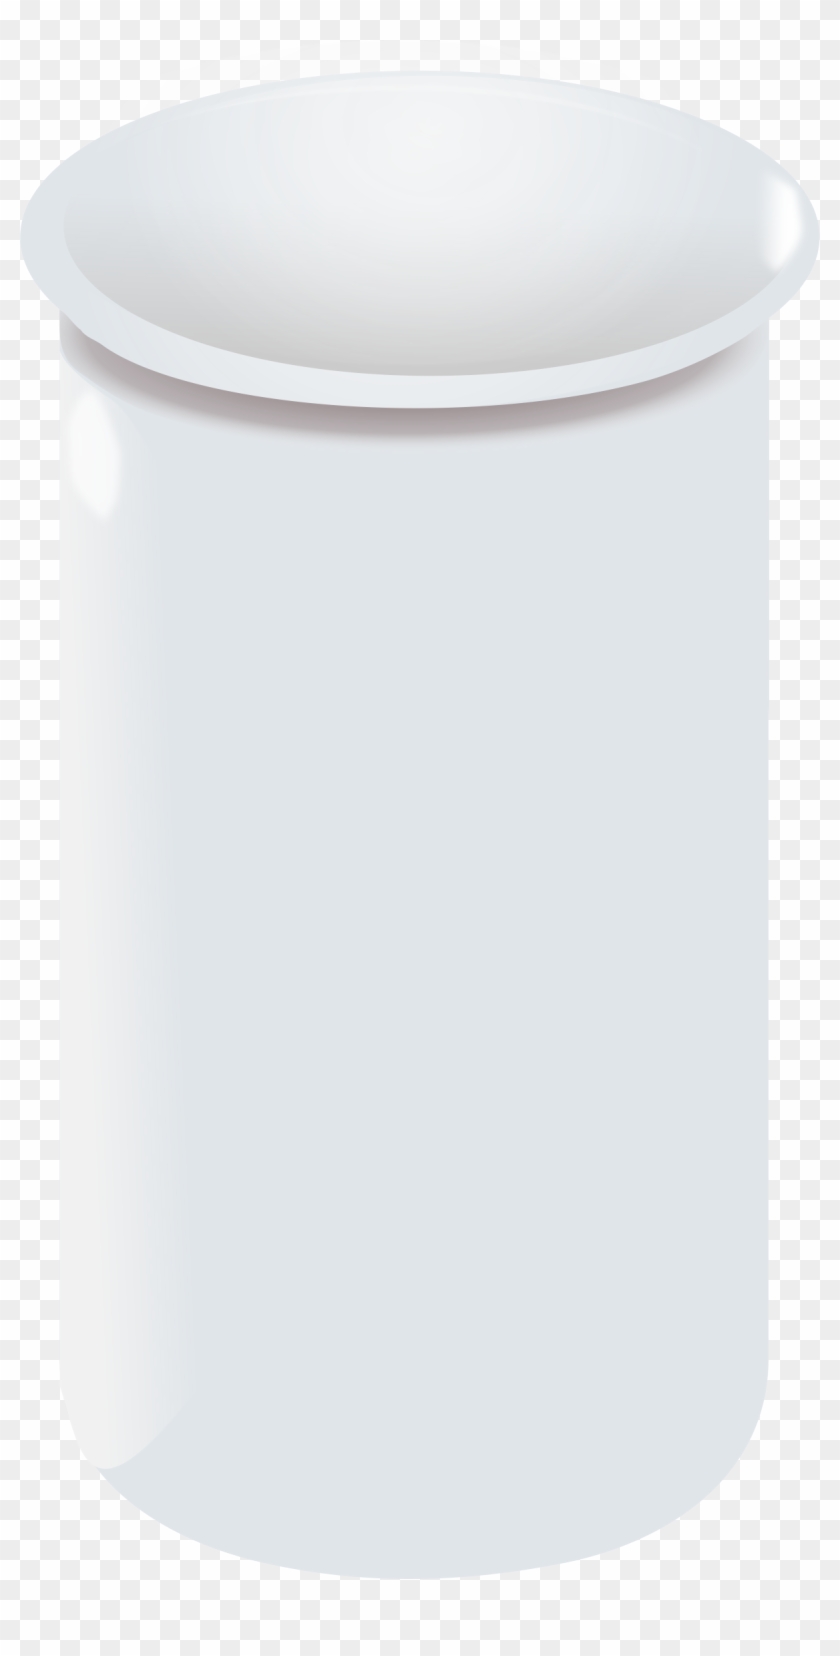 This Free Icons Png Design Of Mug Or Something Of Mug - Serveware Clipart #3849971